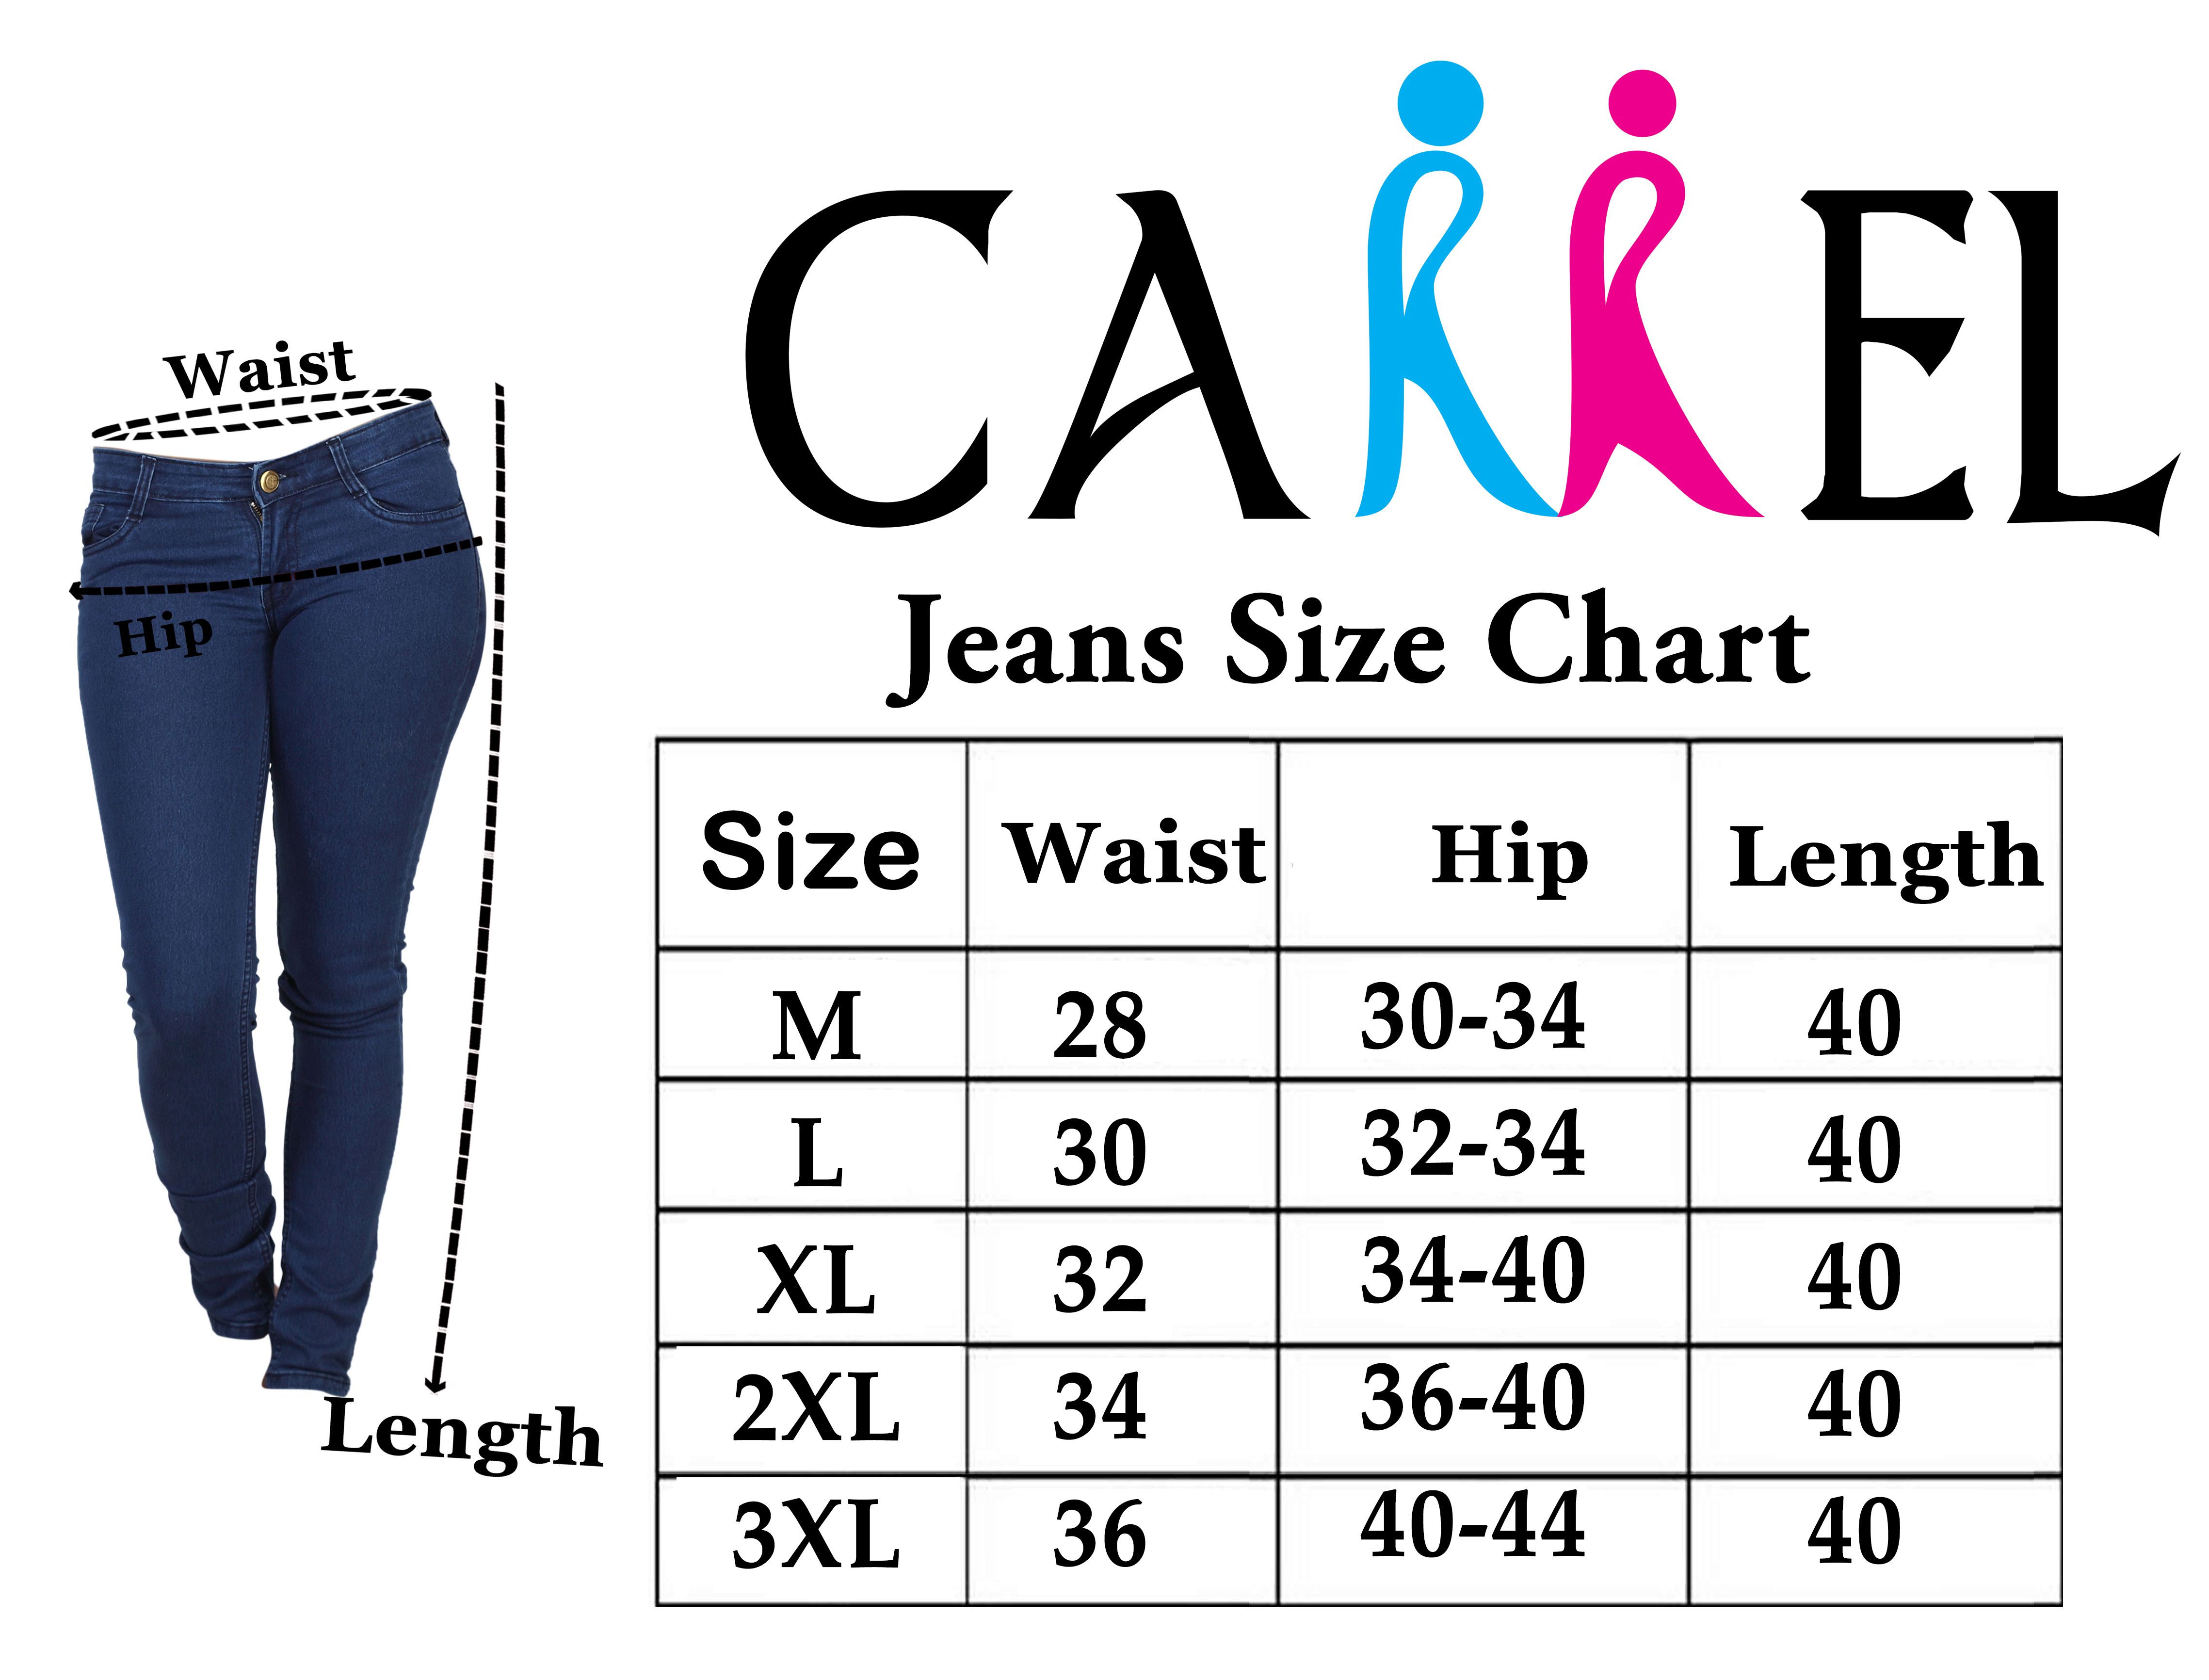 Carrel Denim Jeans Buy Carrel Denim Jeans Online At Best Prices In